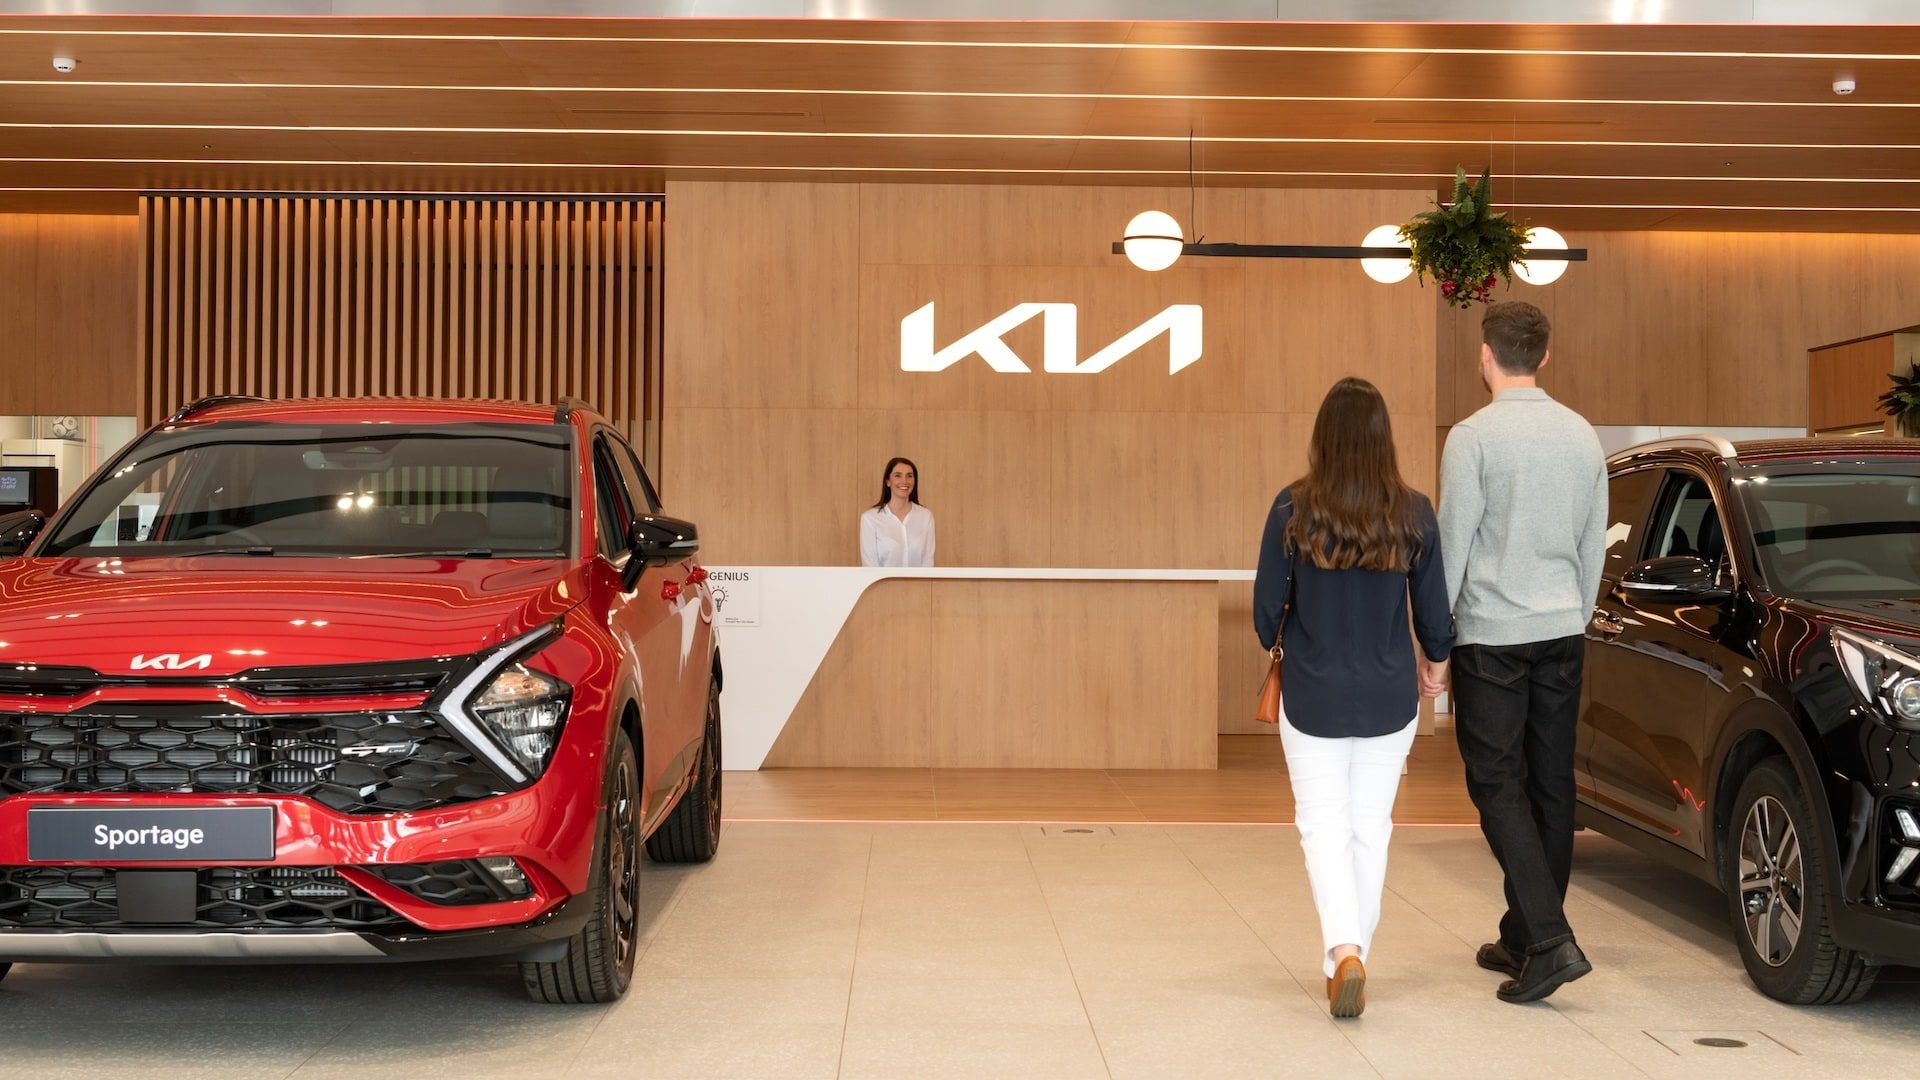 Kia voted best by UK dealerships